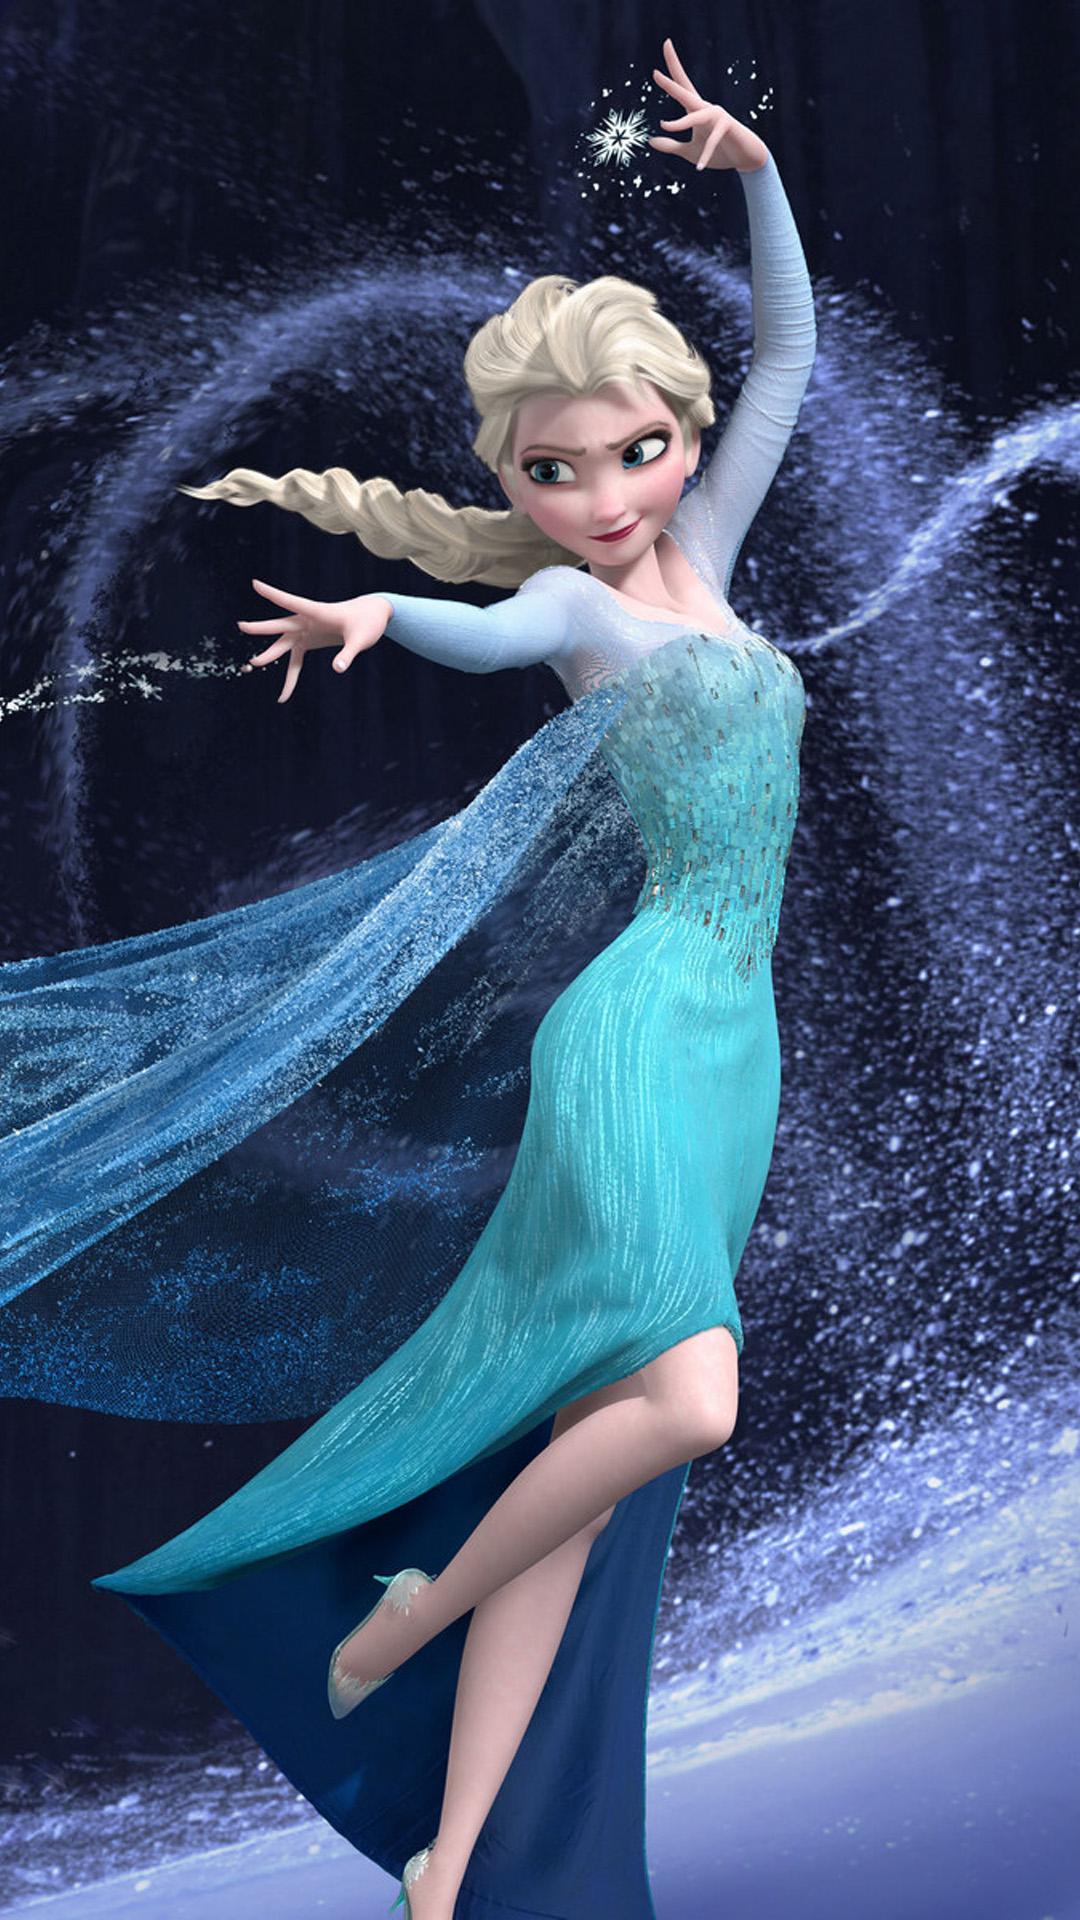 Frozen Ice Princess iPhone 8 Wallpaper Free Download